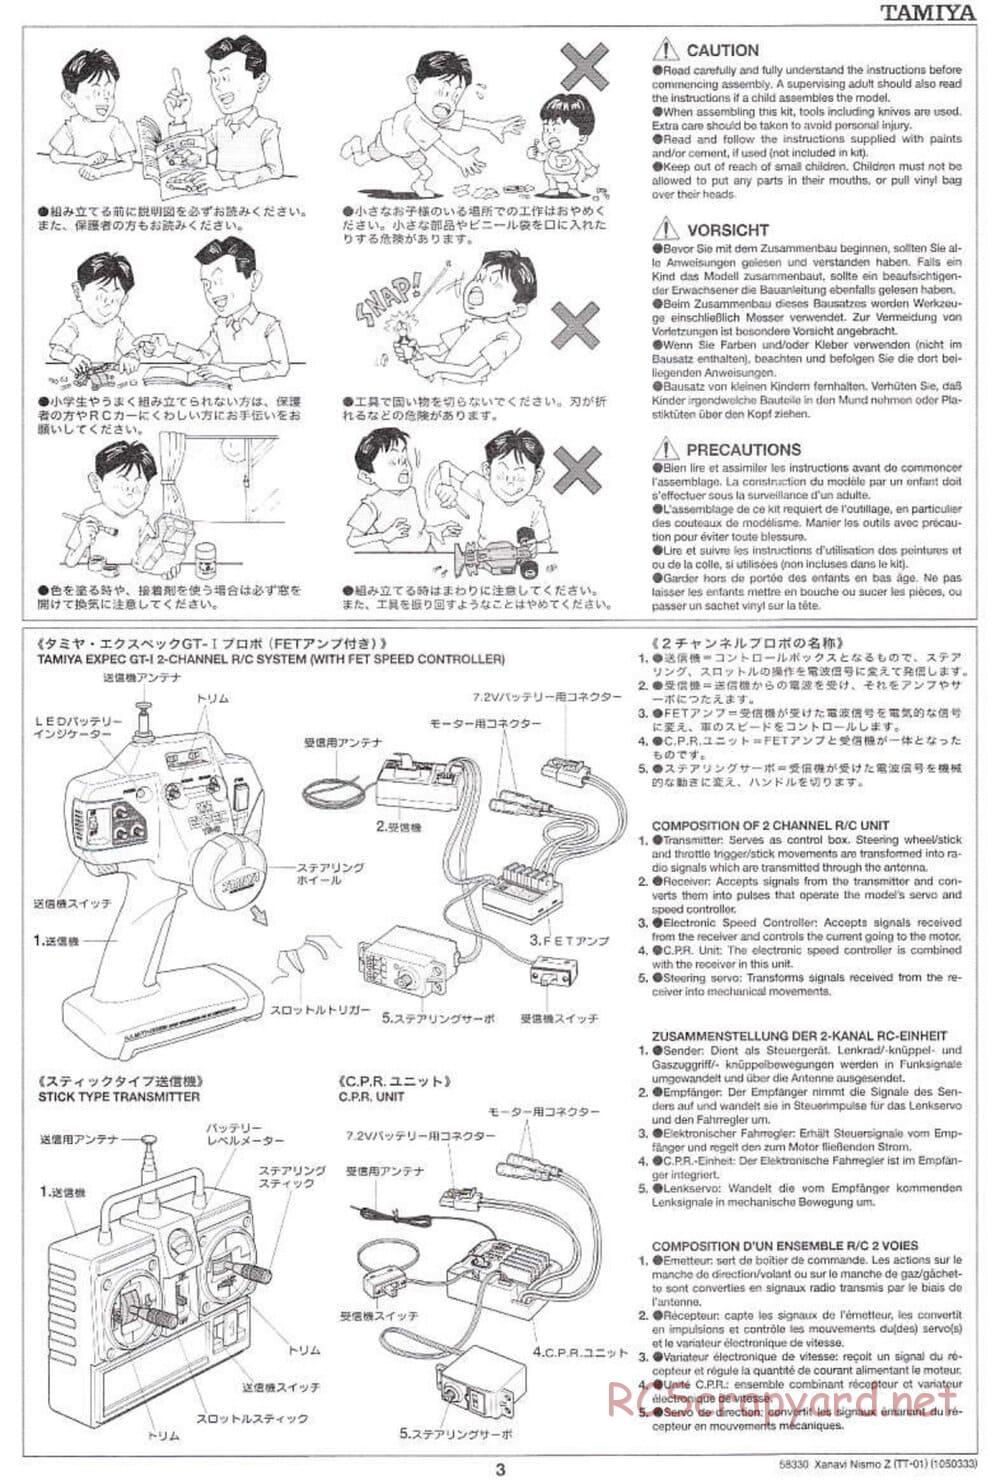 Tamiya - Xanavi Nismo Z - TT-01 Chassis - Manual - Page 3